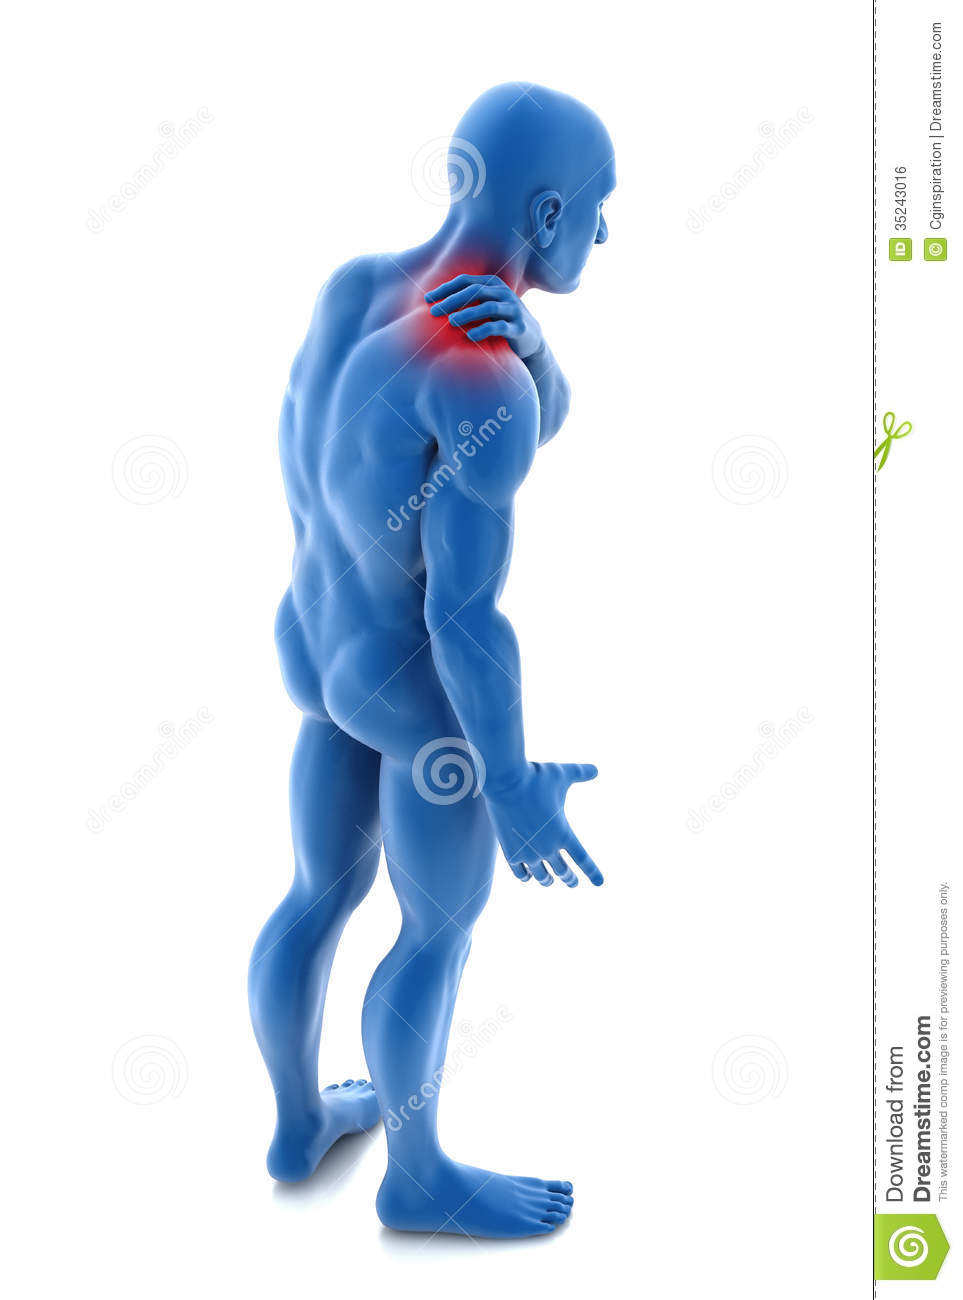 Shoulder Pain Royalty Free Stock Image   Image  35243016